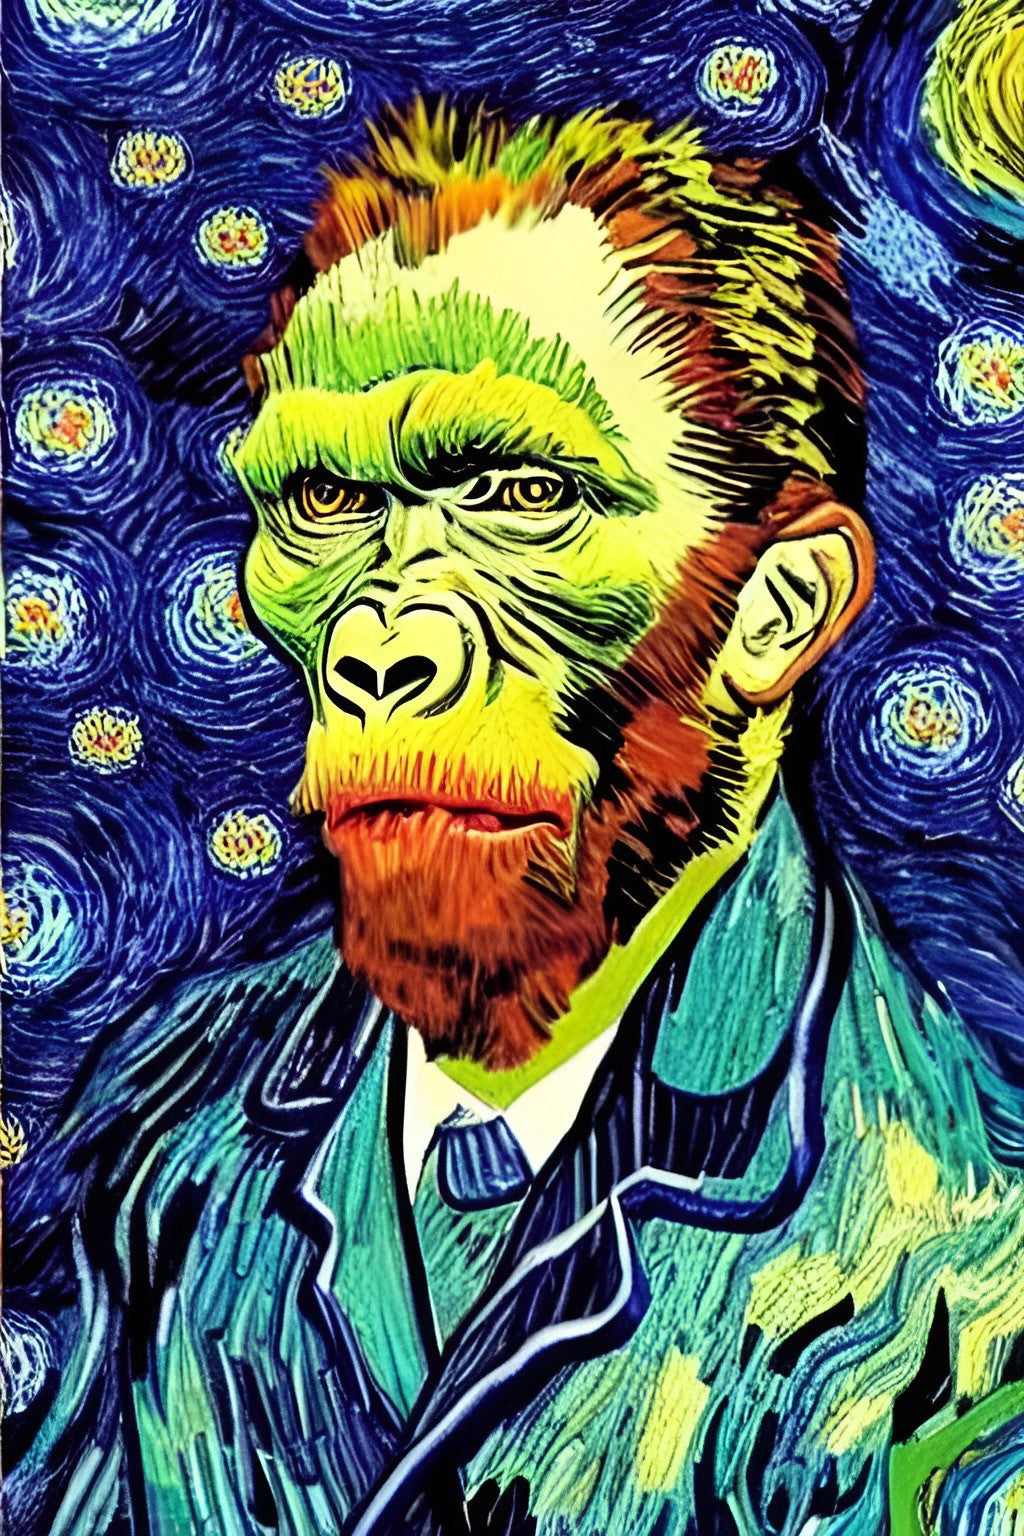 Van Goghrilla